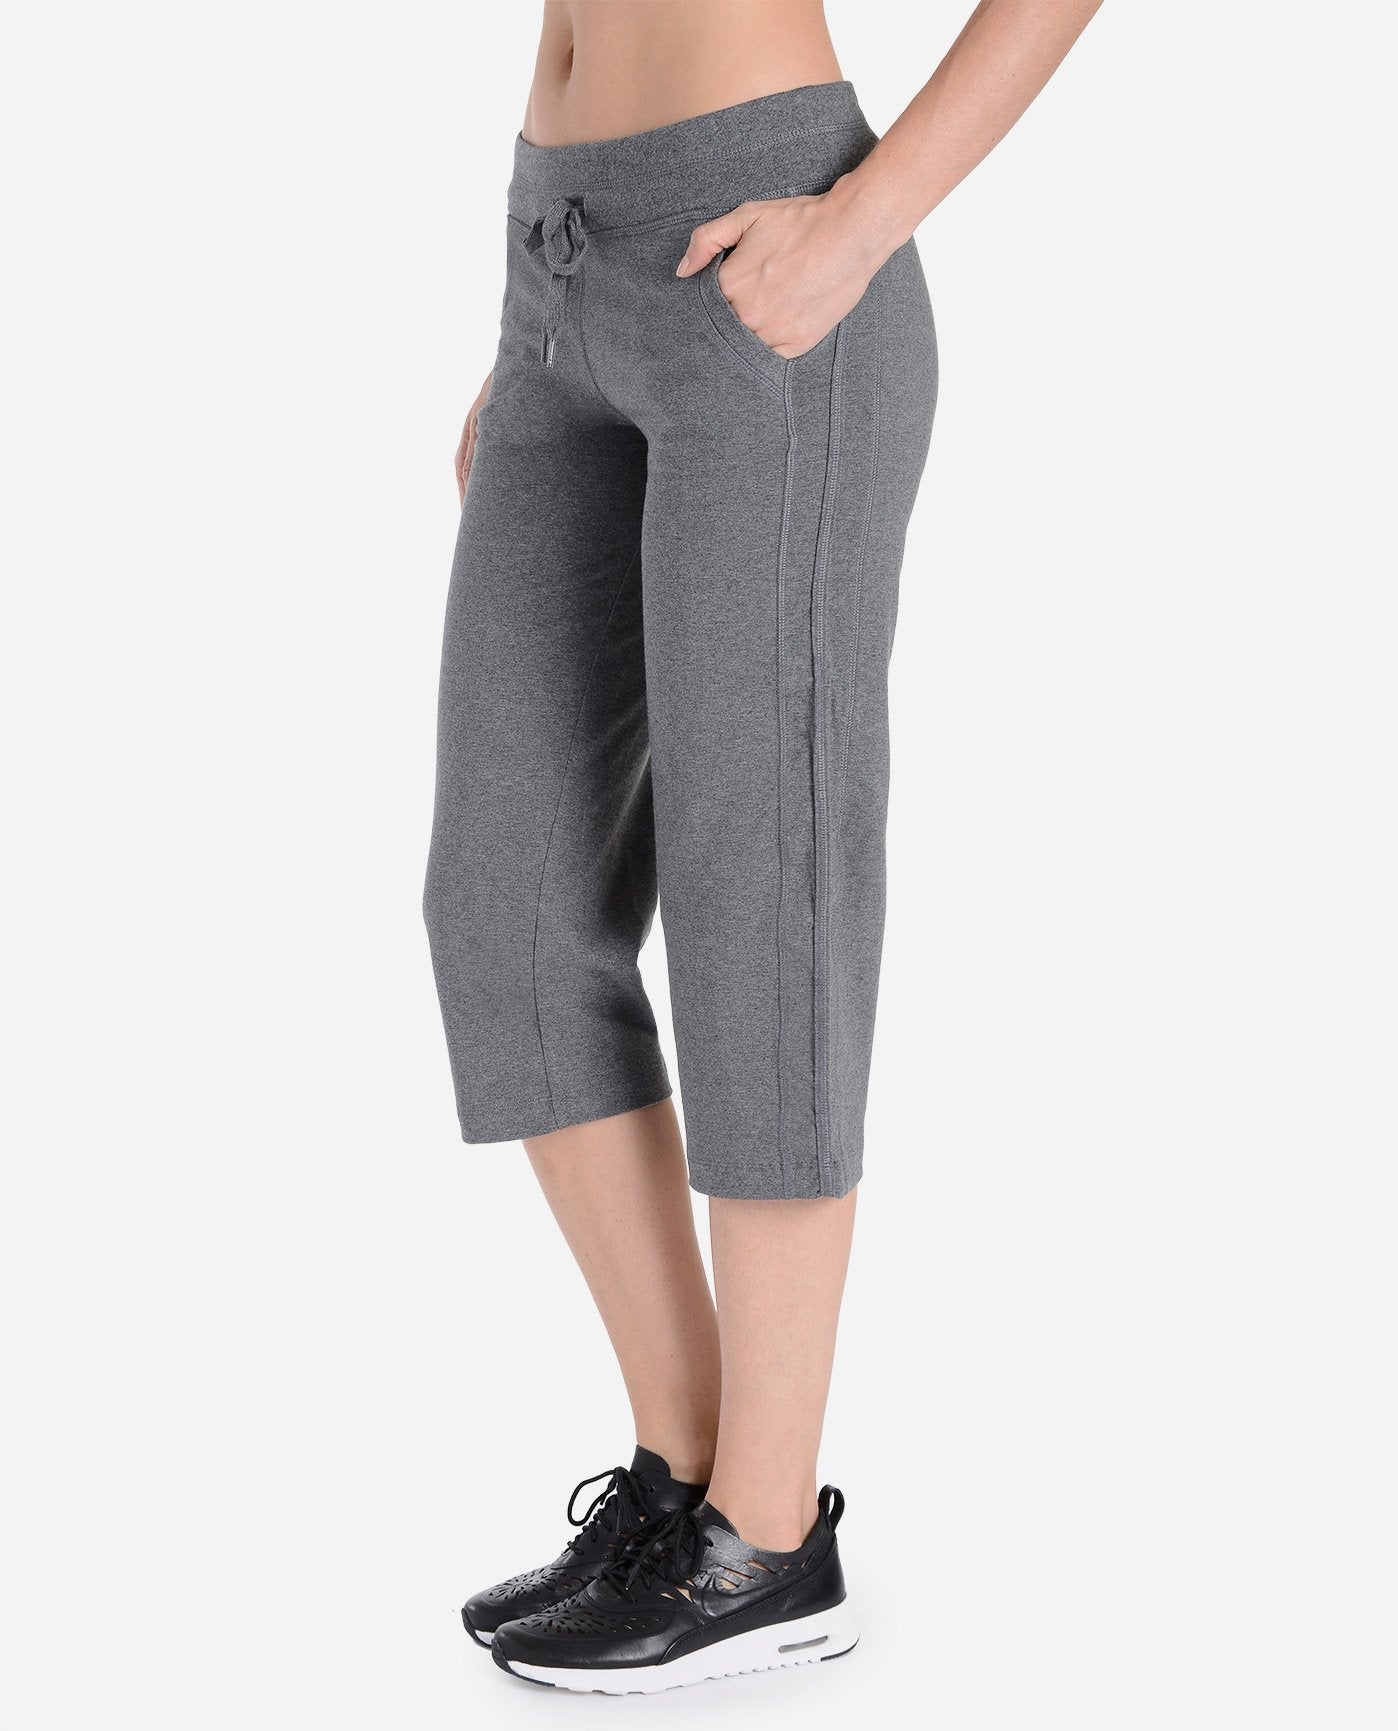 Danskin Now (XL) Athletic Capris Pants w inner waist pocket Gray